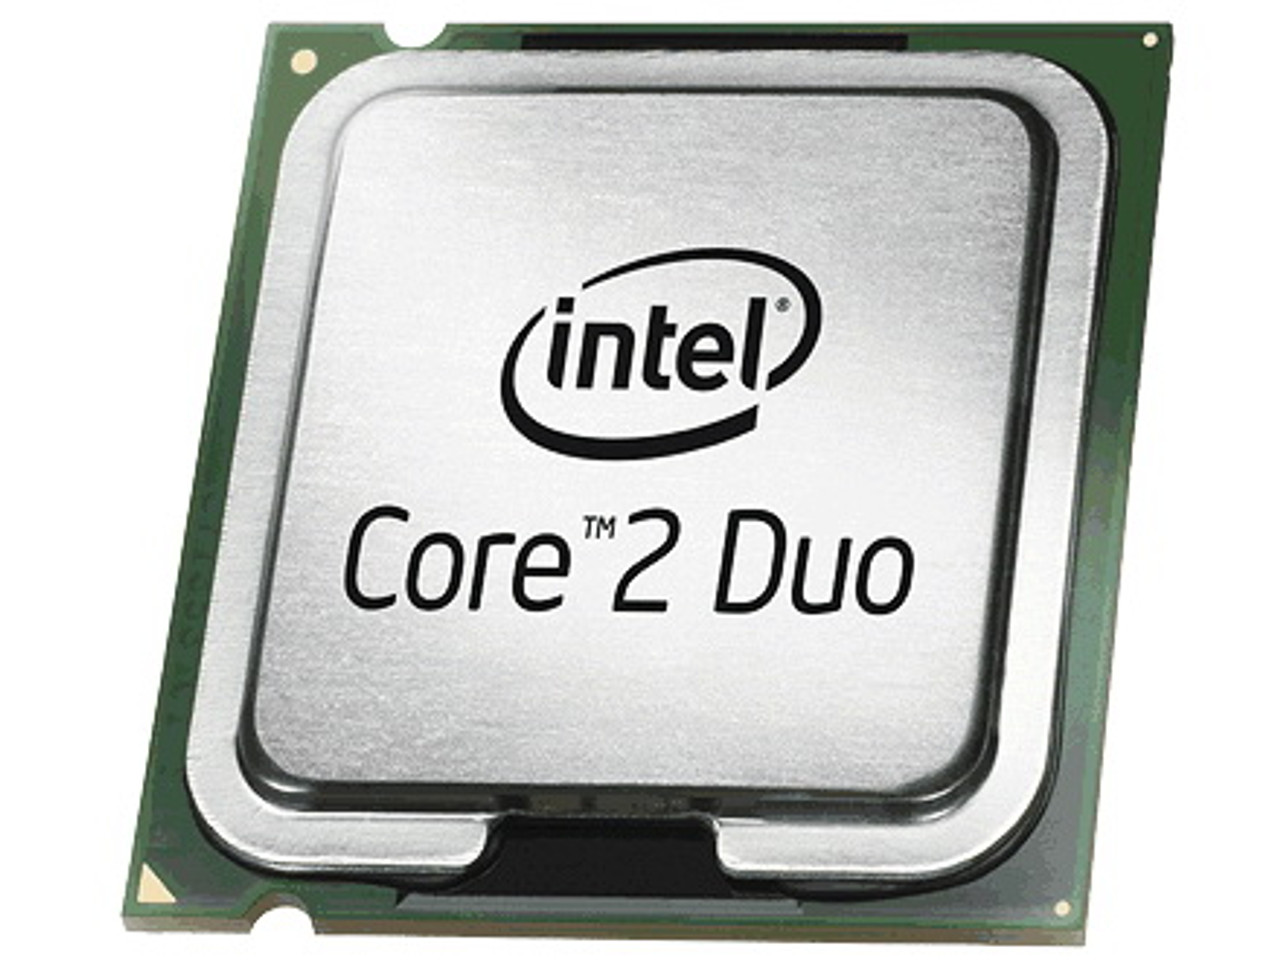 SLA5D - Intel Core 2 Duo E6400 Dual Core 2.13GHz 2MB L2 Cache 1066MHz FSB Socket LGA775 65NM Processor